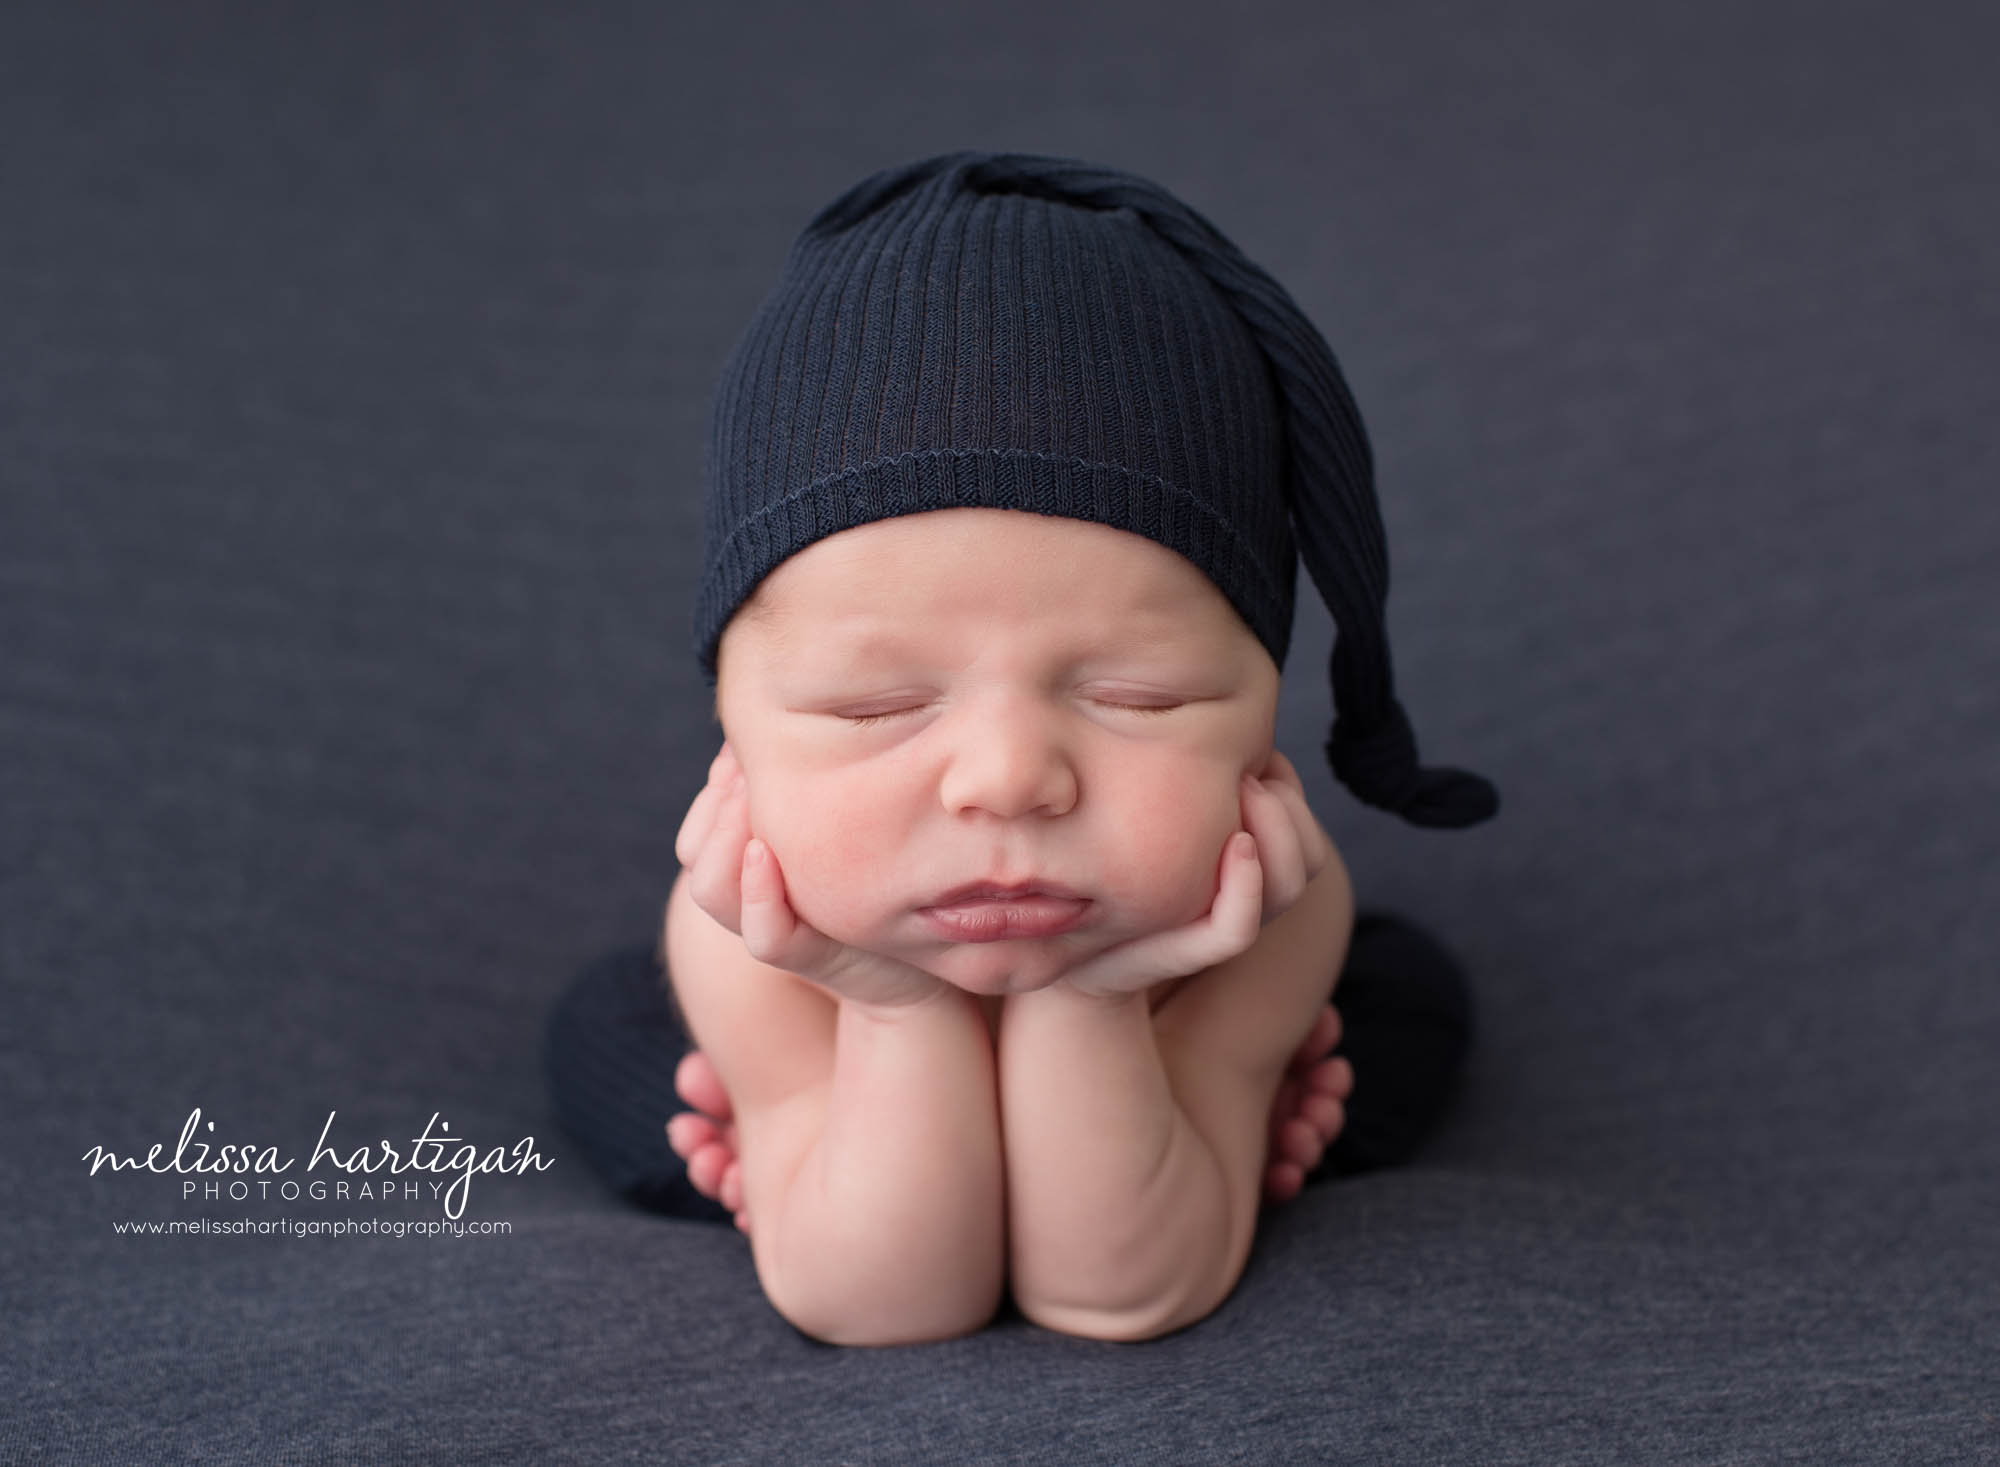 newborn baby goy posed froggy pose wearing navy blue sleepy cap Newborn Photography Middlesex county CT studio